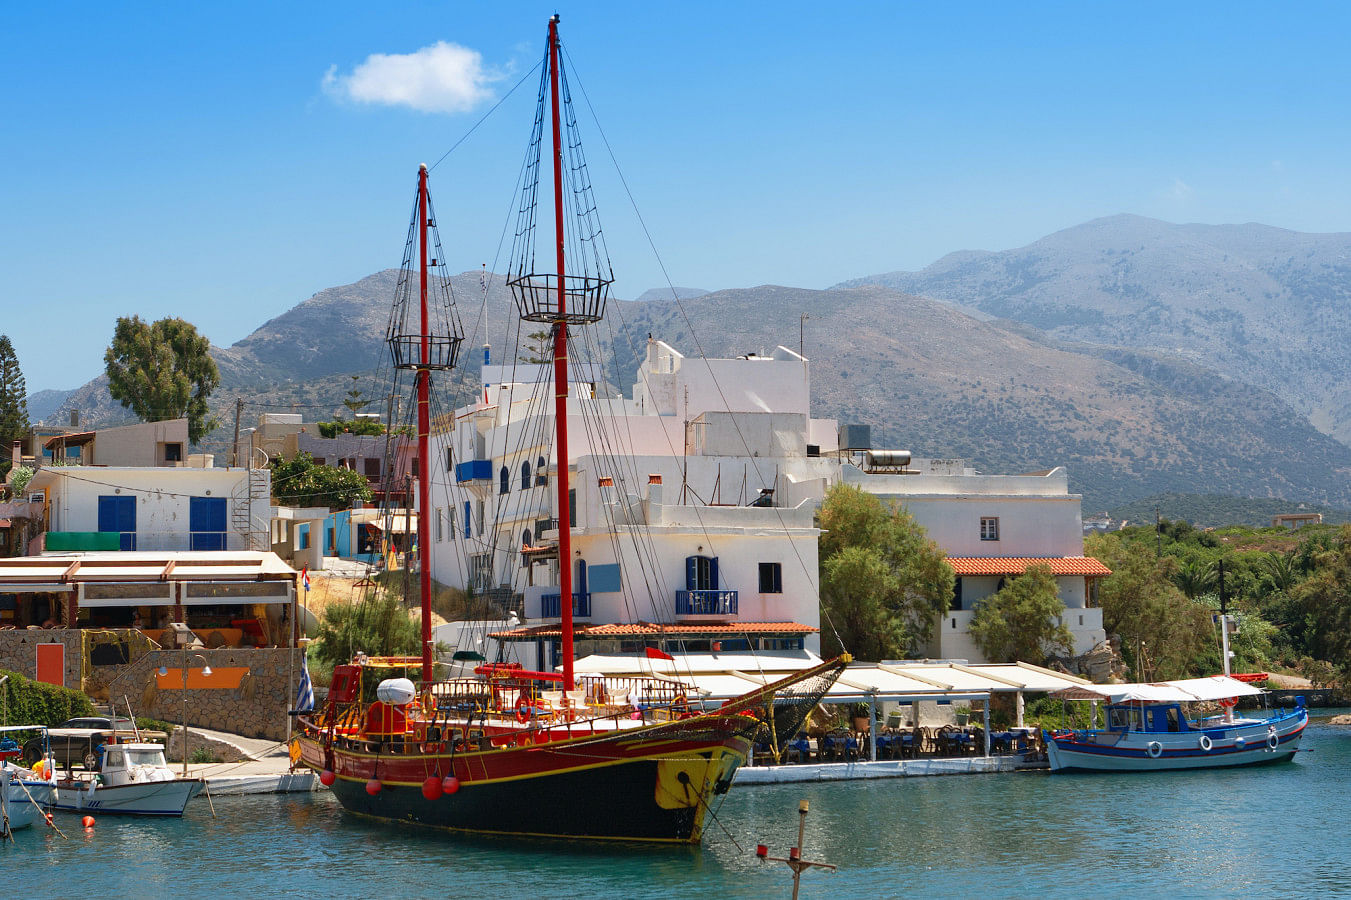 Hyr en båt i Kreta